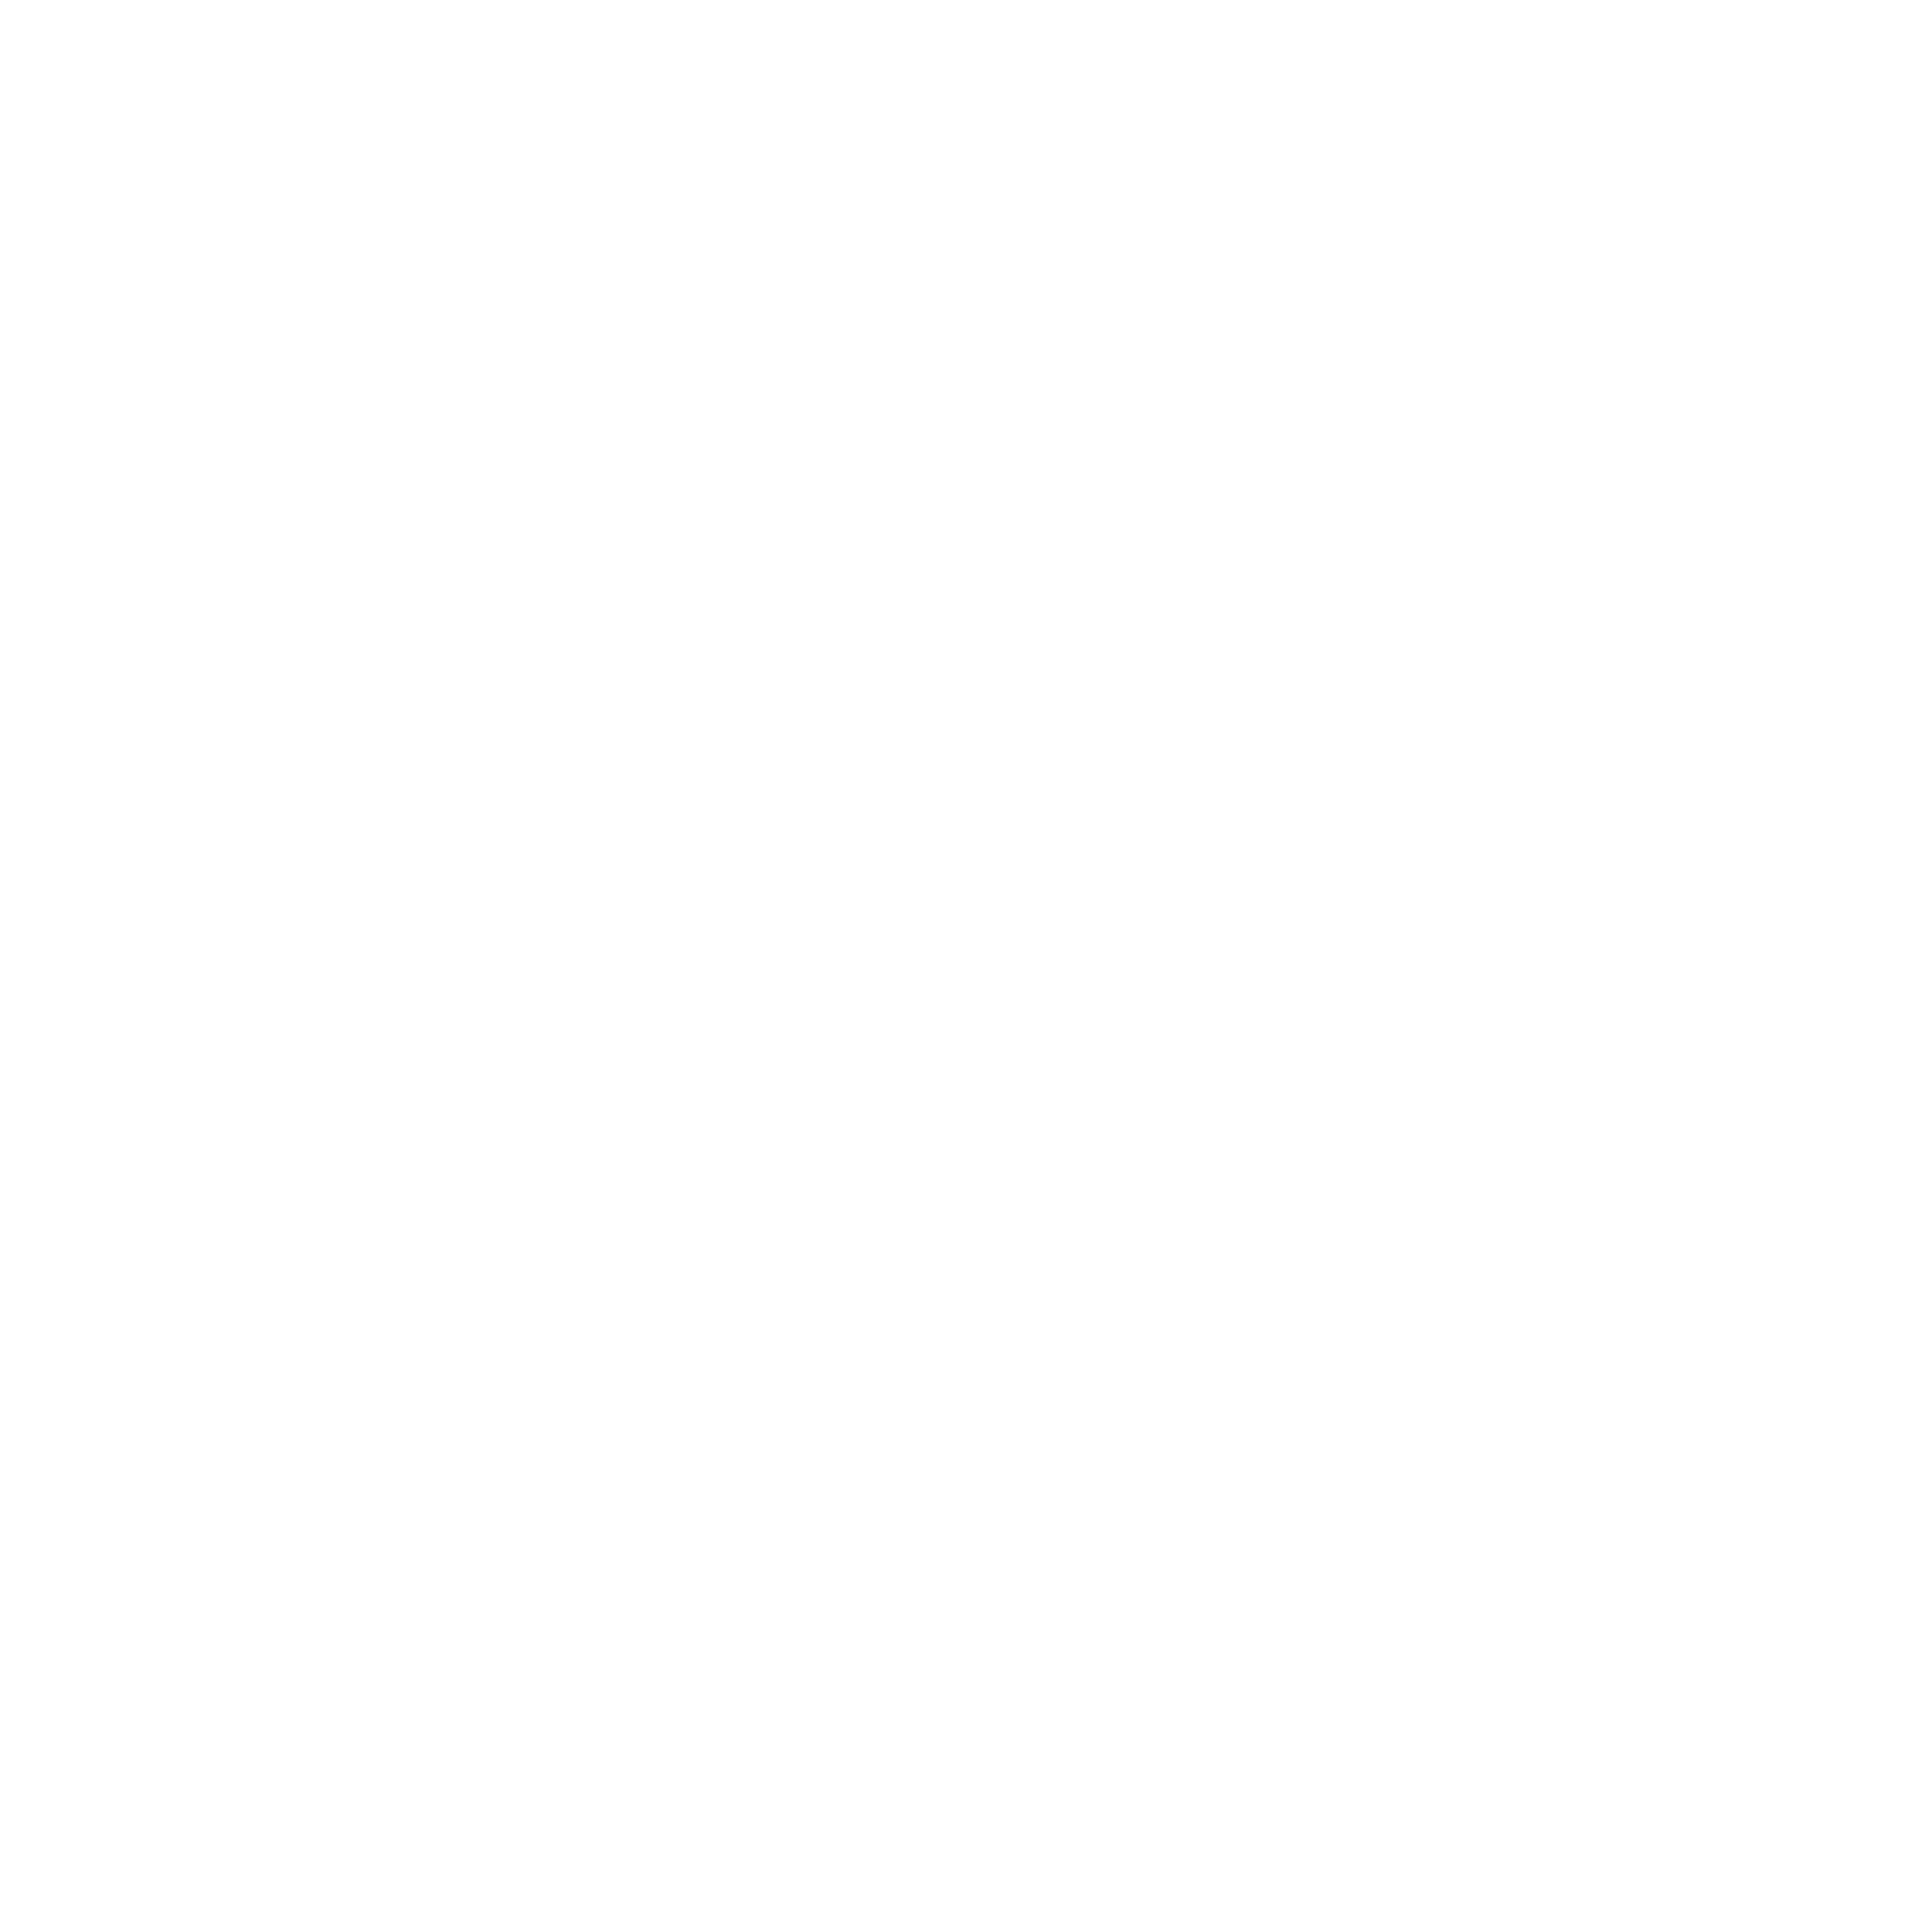 The Bridge Restaurant Prestbury